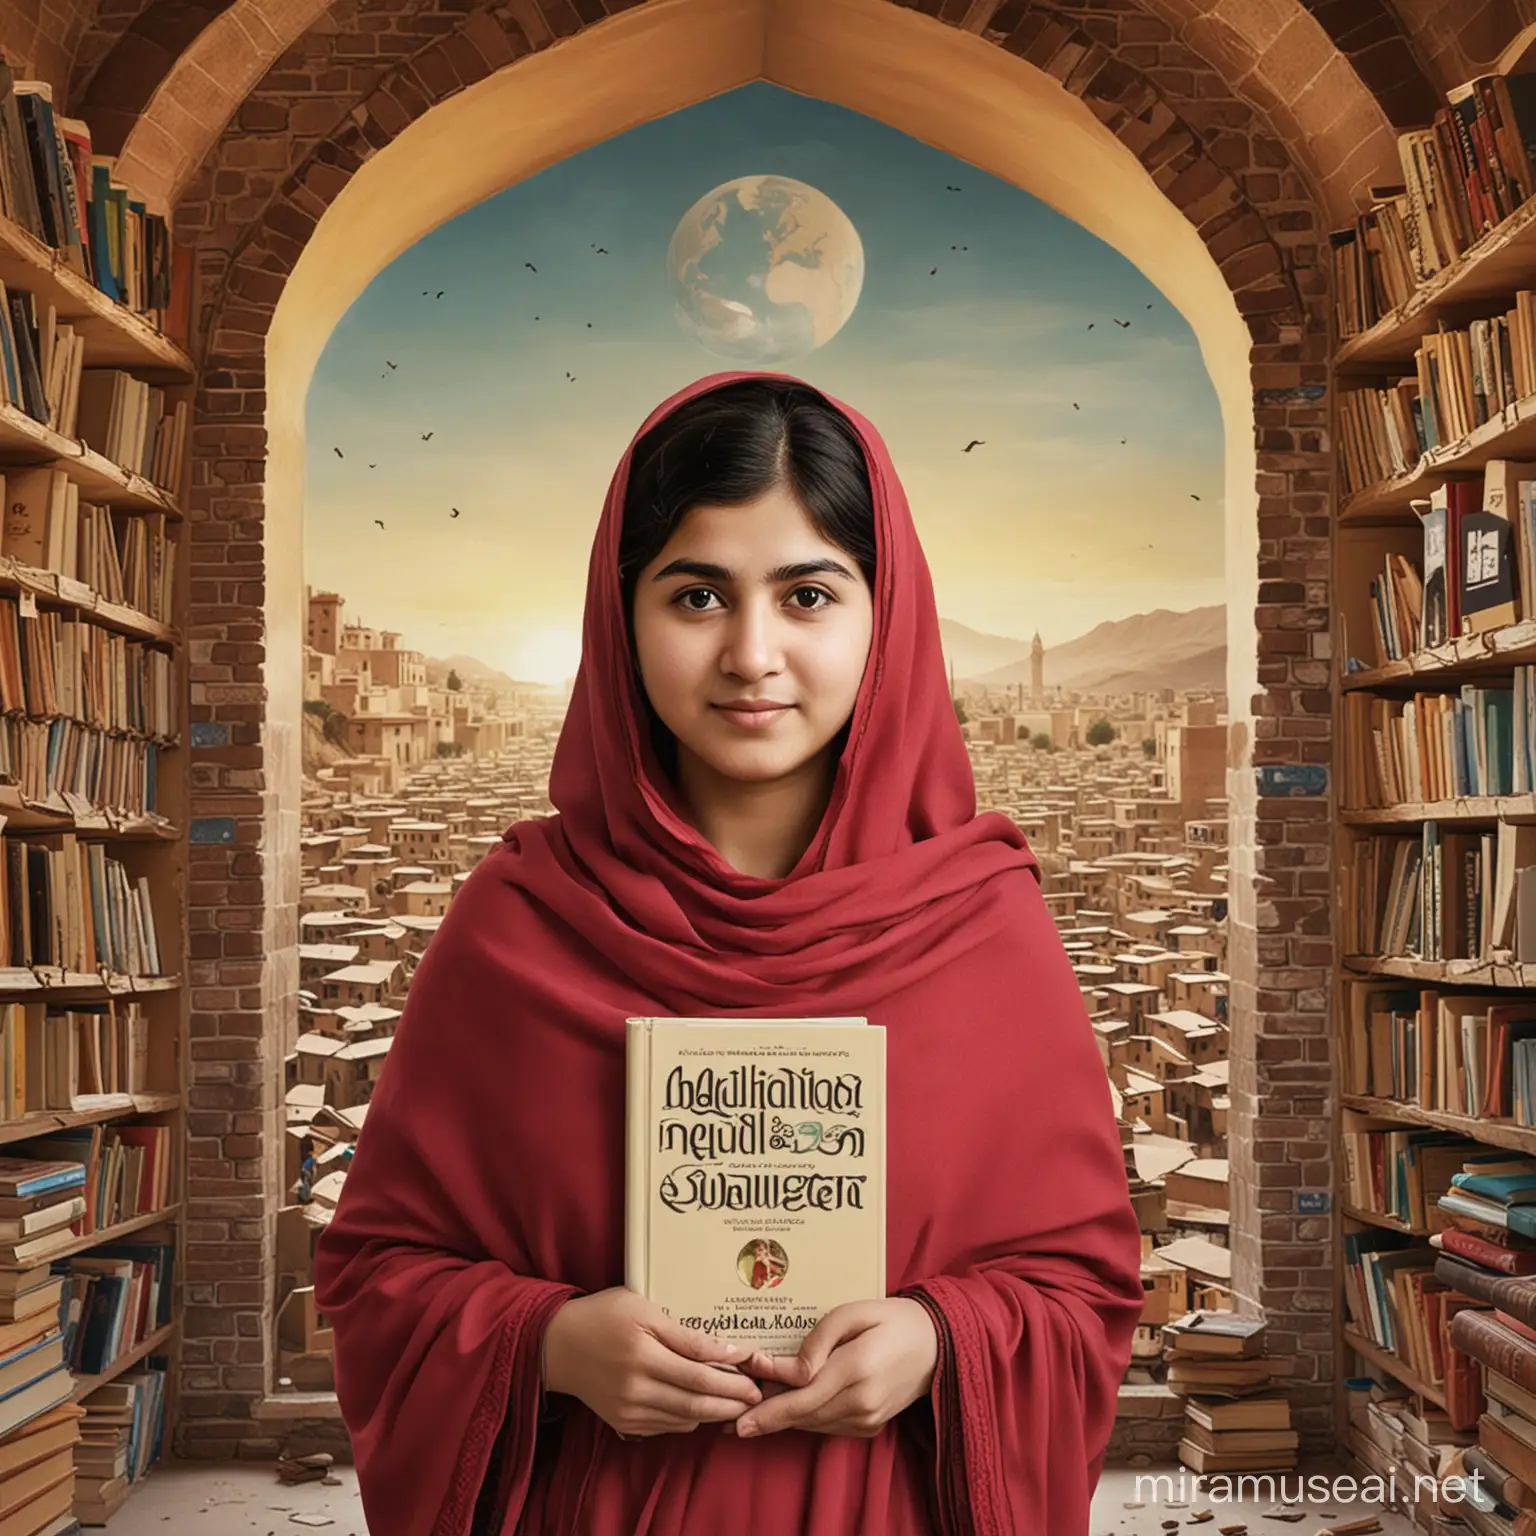 Malala Yousafzai Champion of Education Rights with Symbolic Book